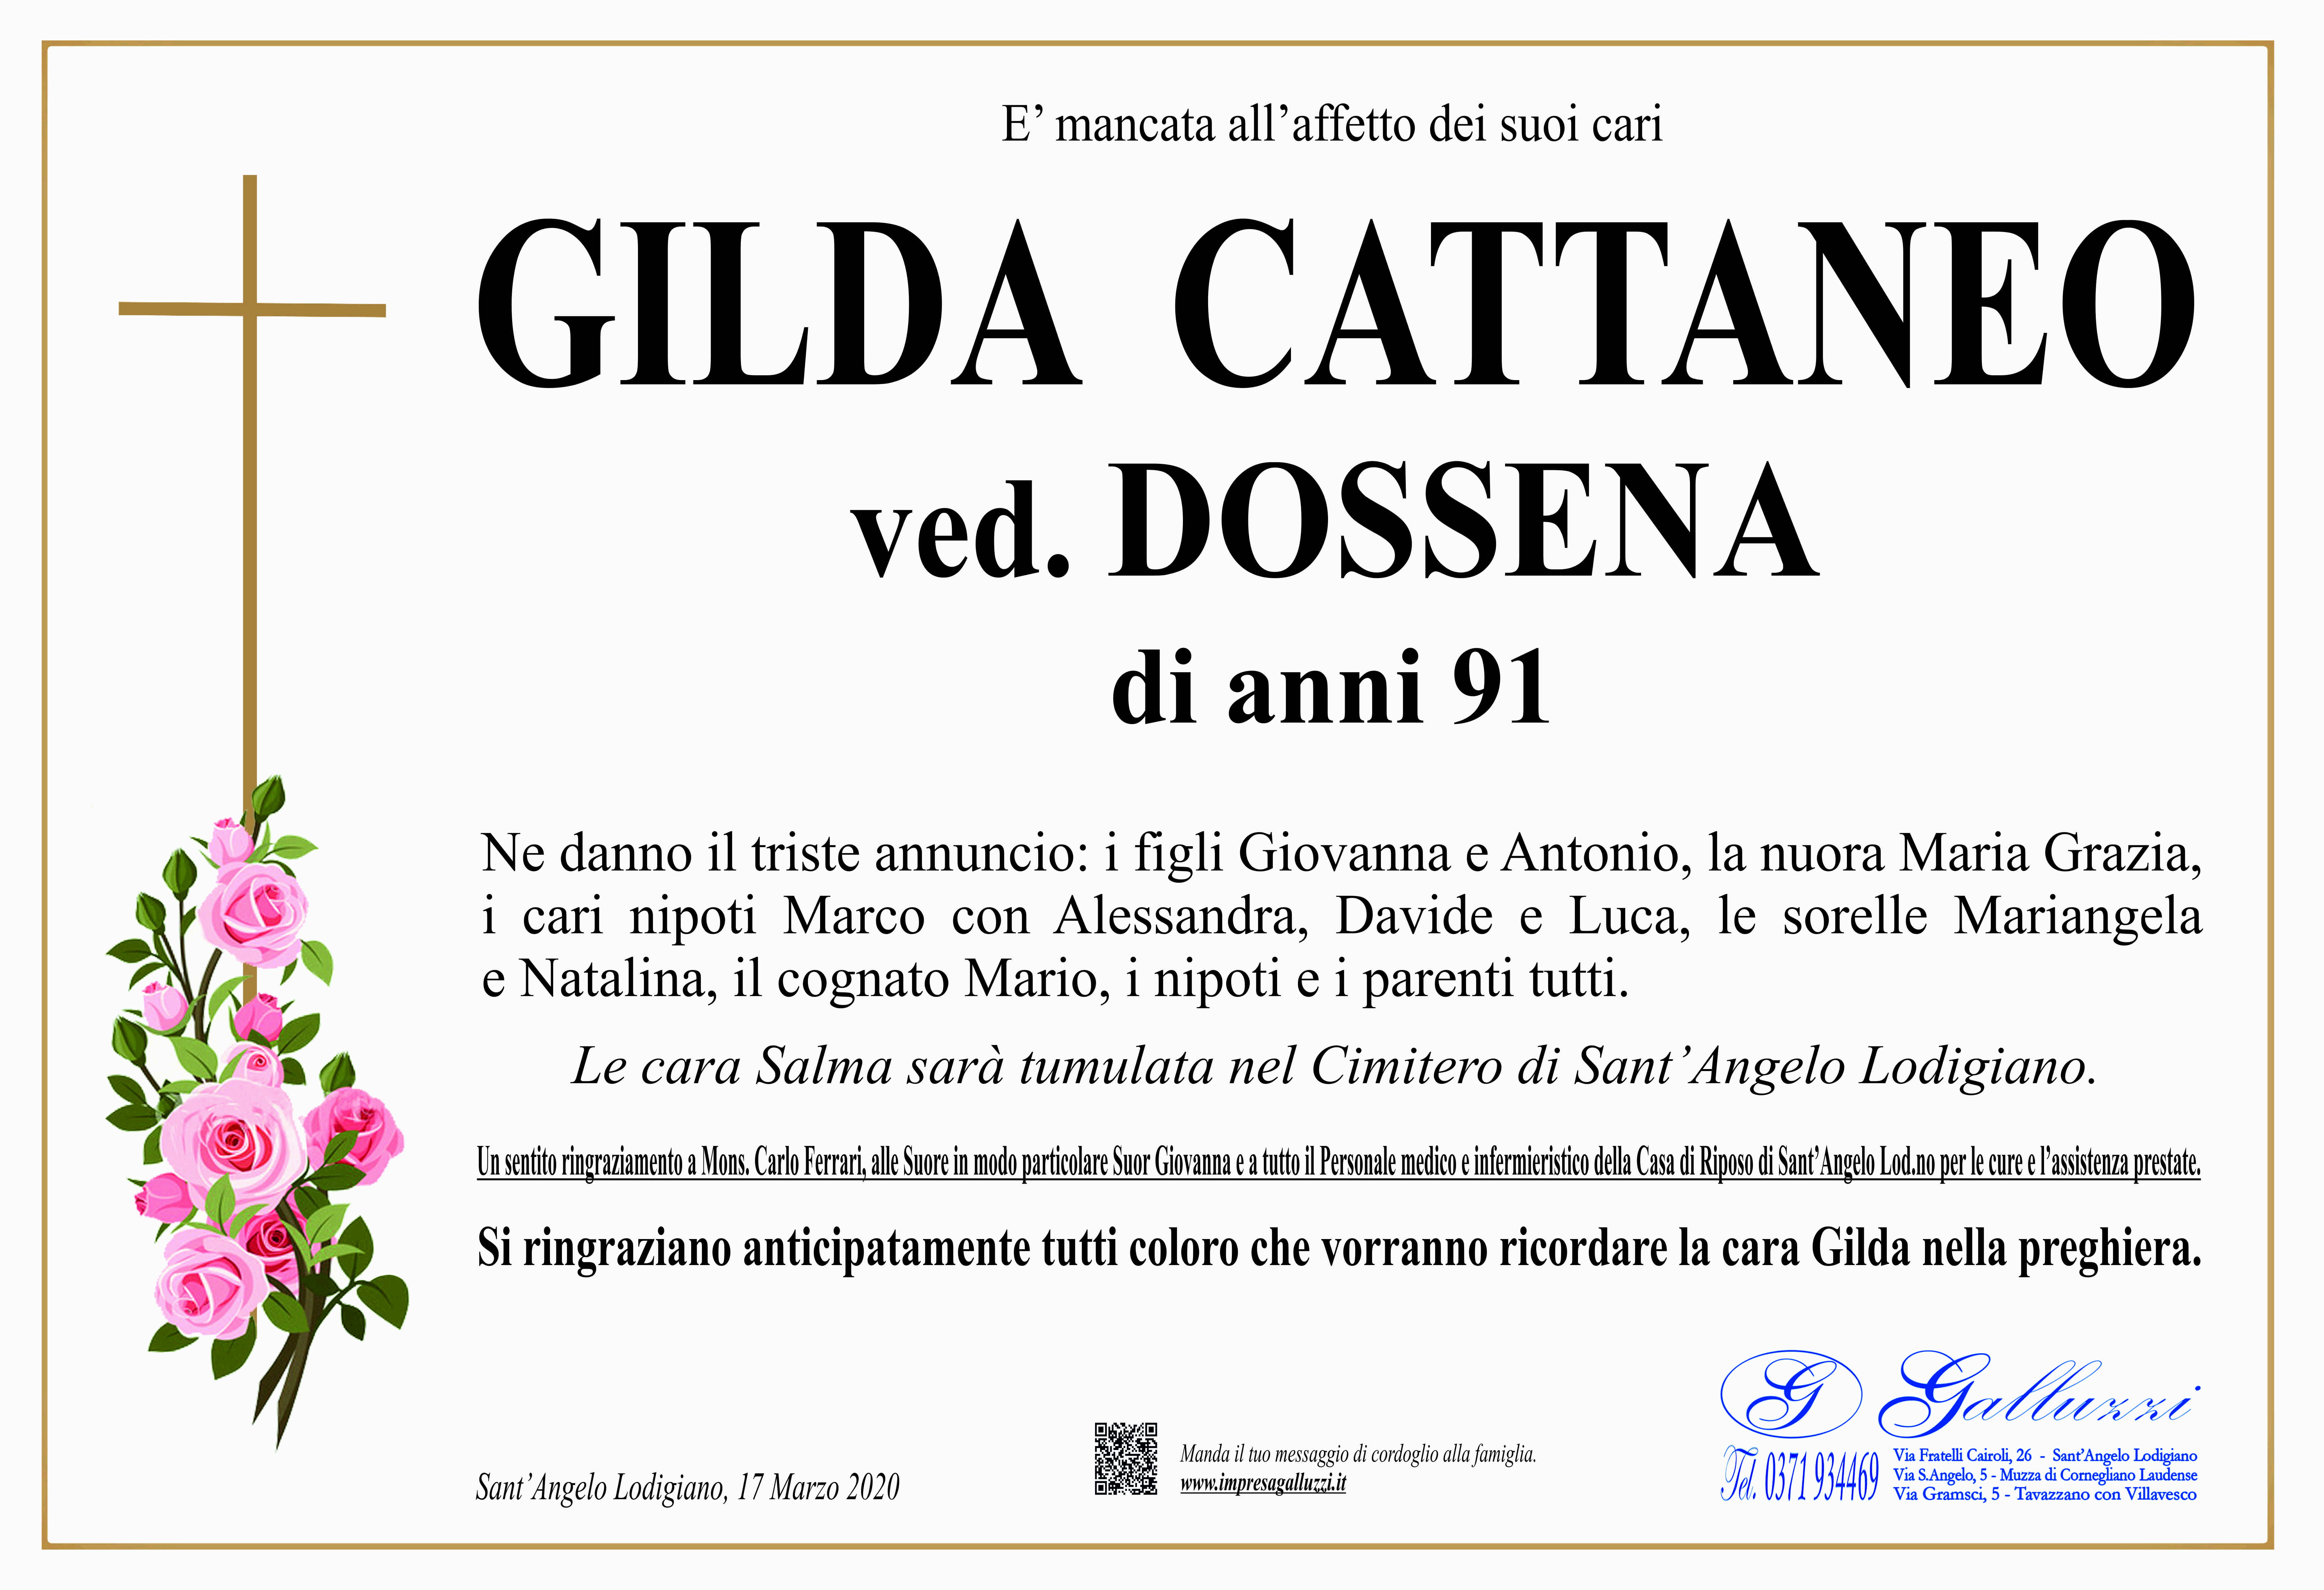 Gilda Cattaneo